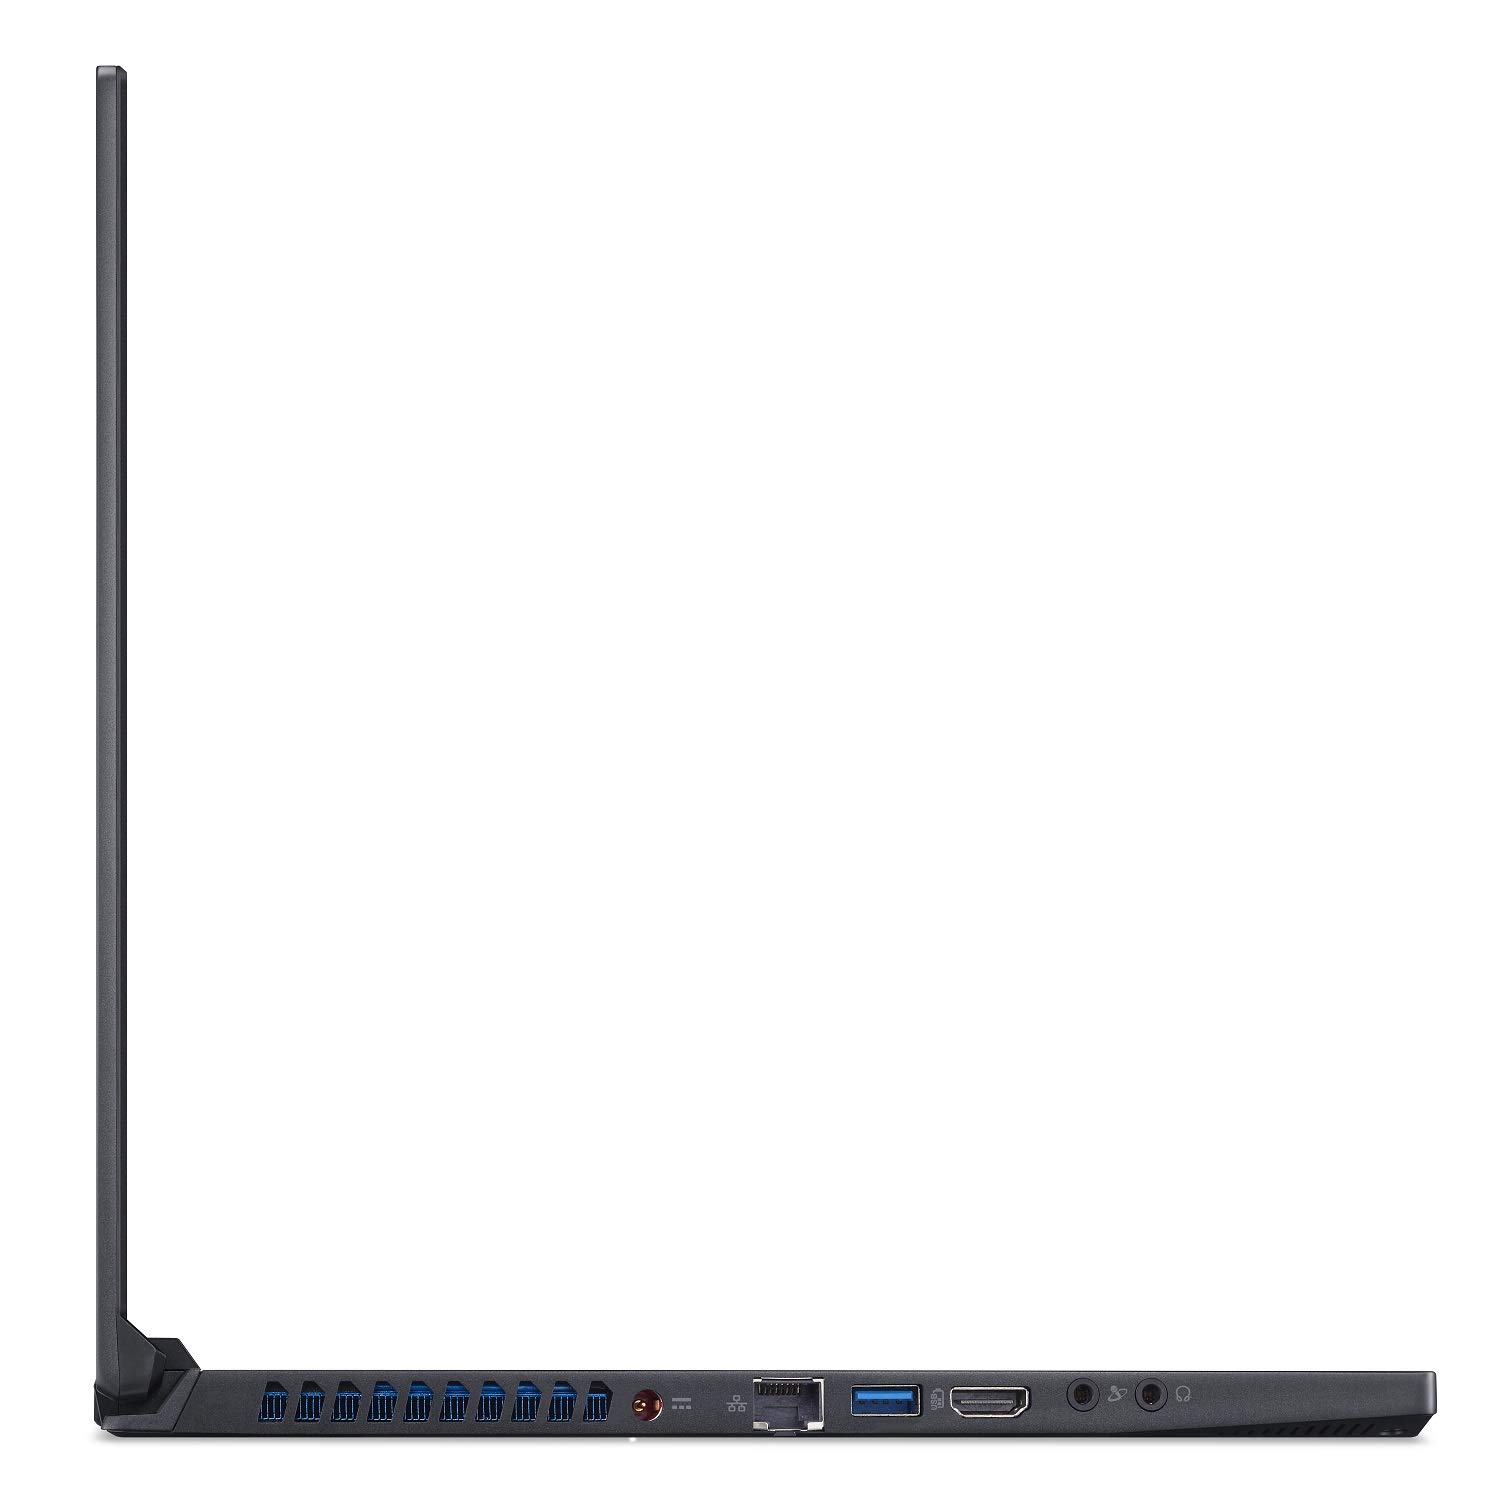 Acer Predator Triton 500 Thin & Light Gaming Laptop, Intel Core i7-9750H, GeForce RTX 2070 Max-Q, 15.6